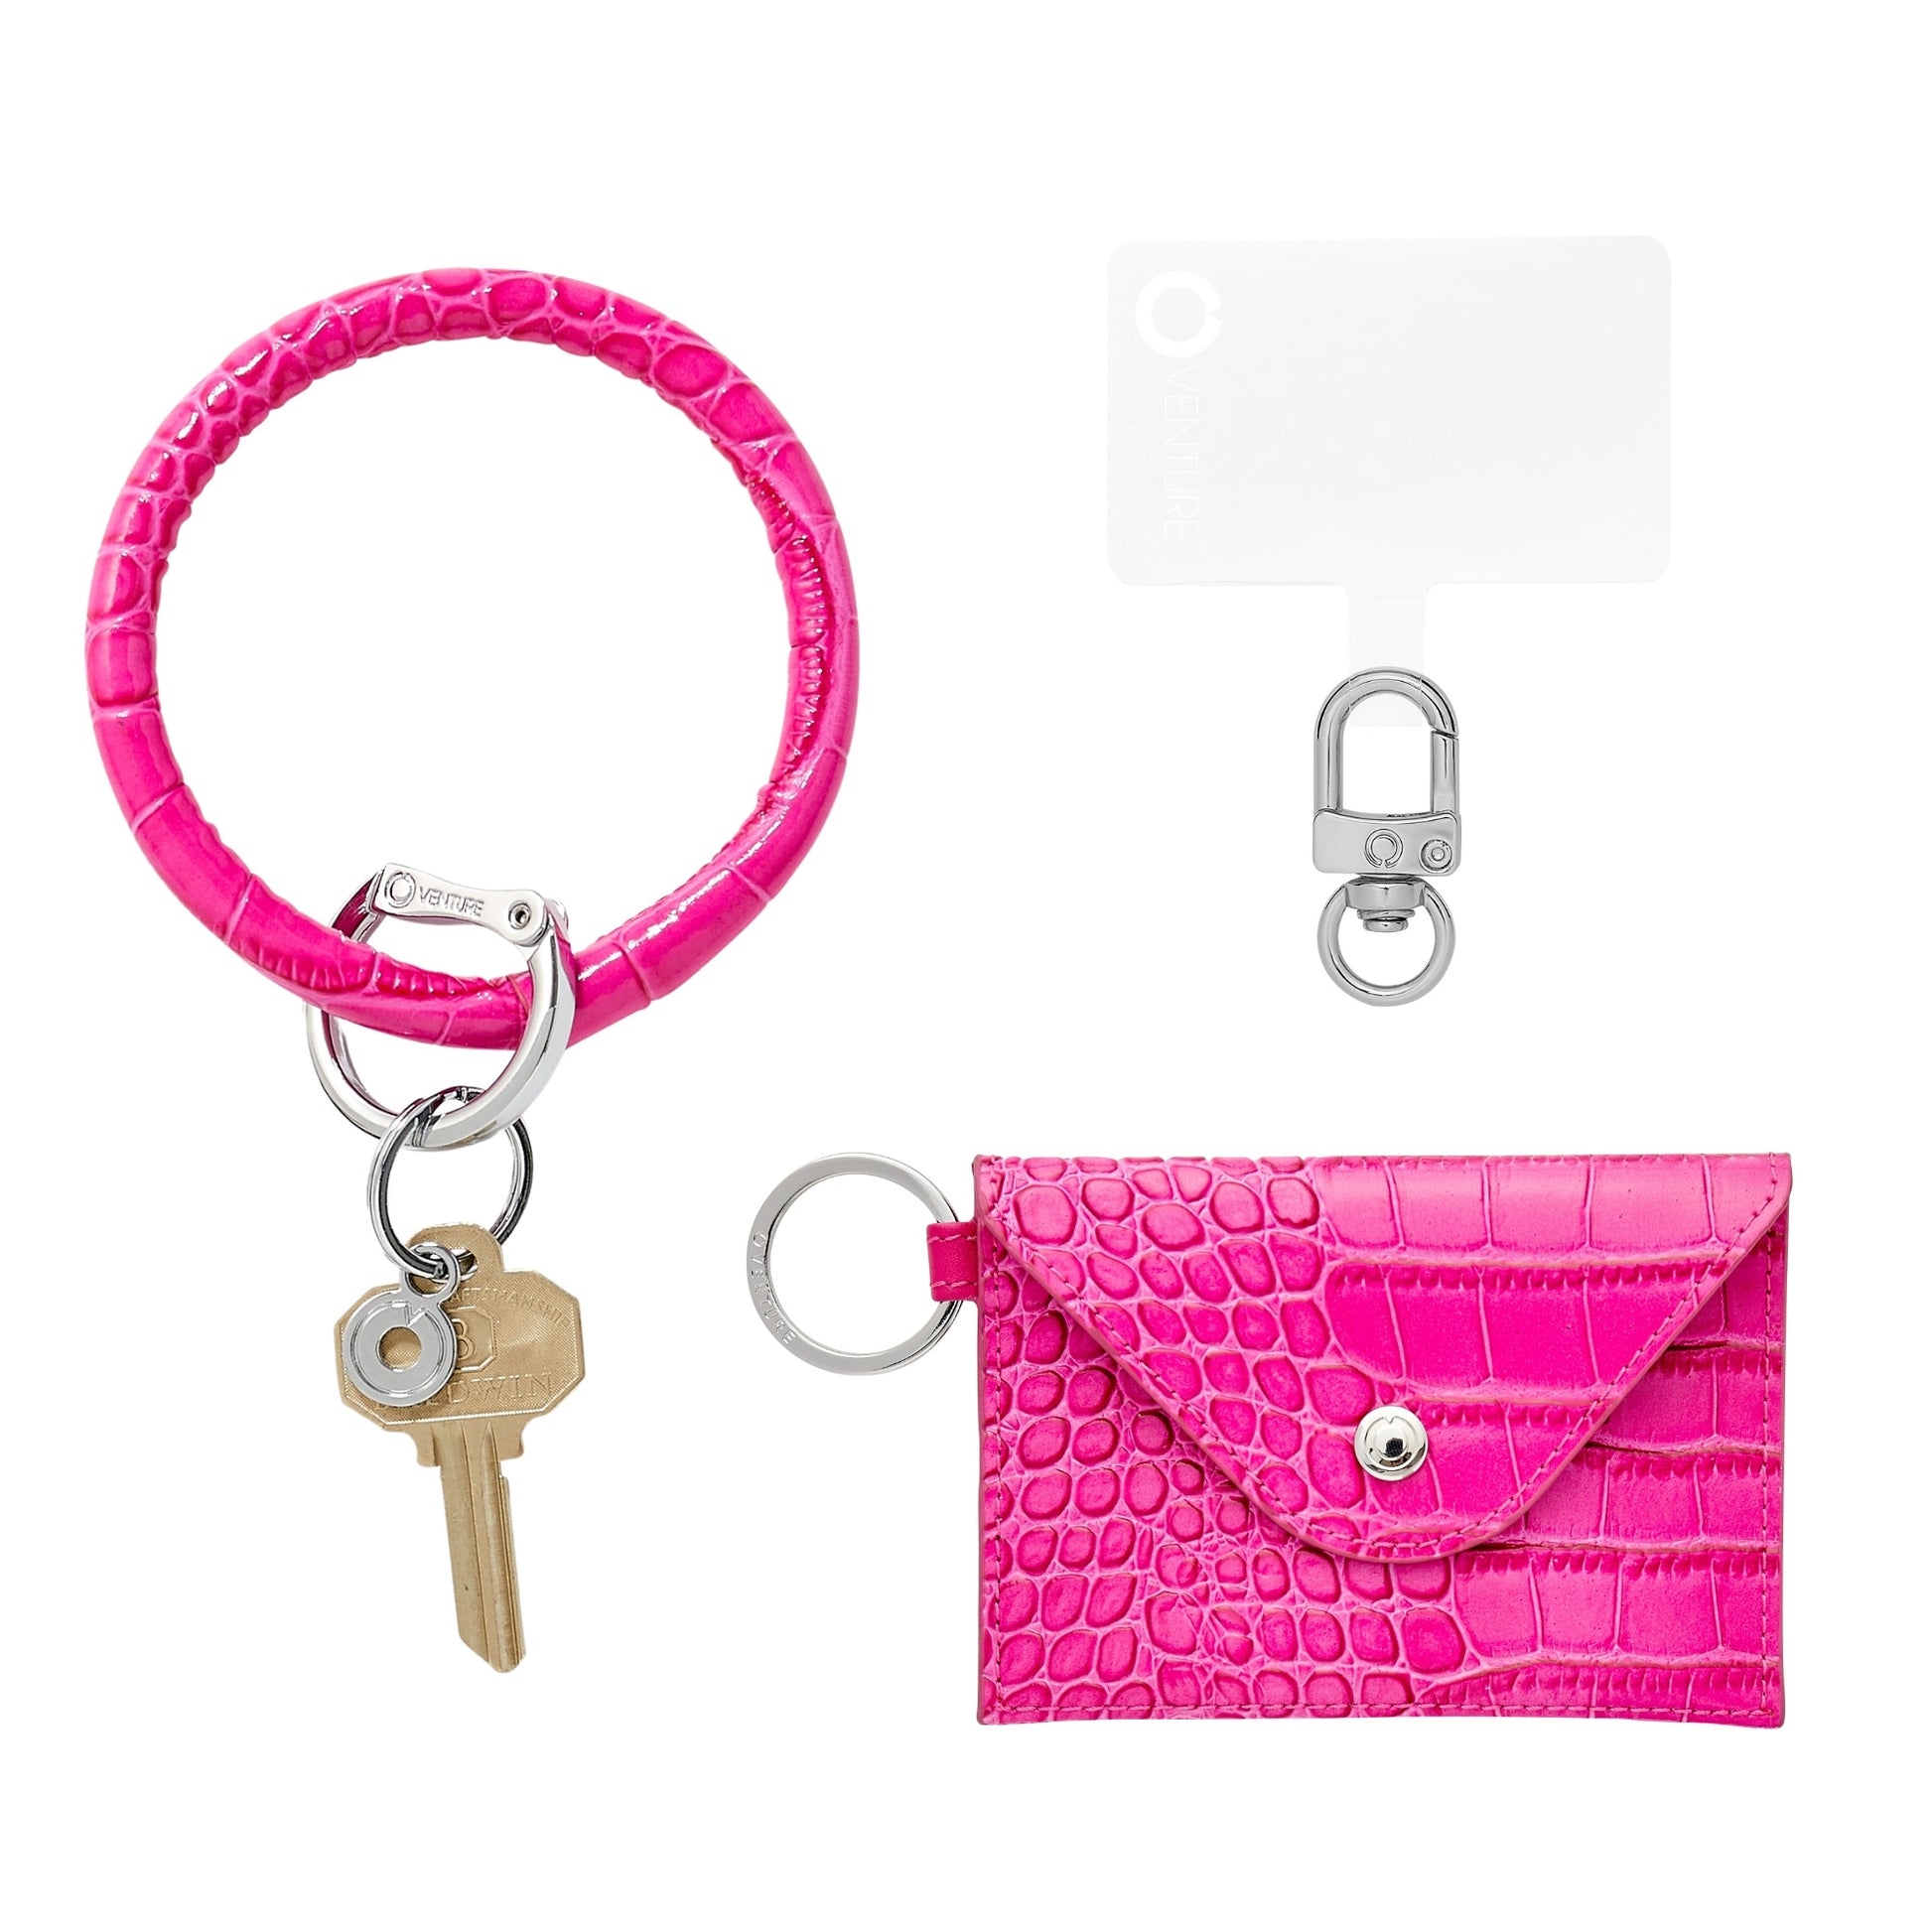 Pink mini envelope wallet wristlet with phone holder.